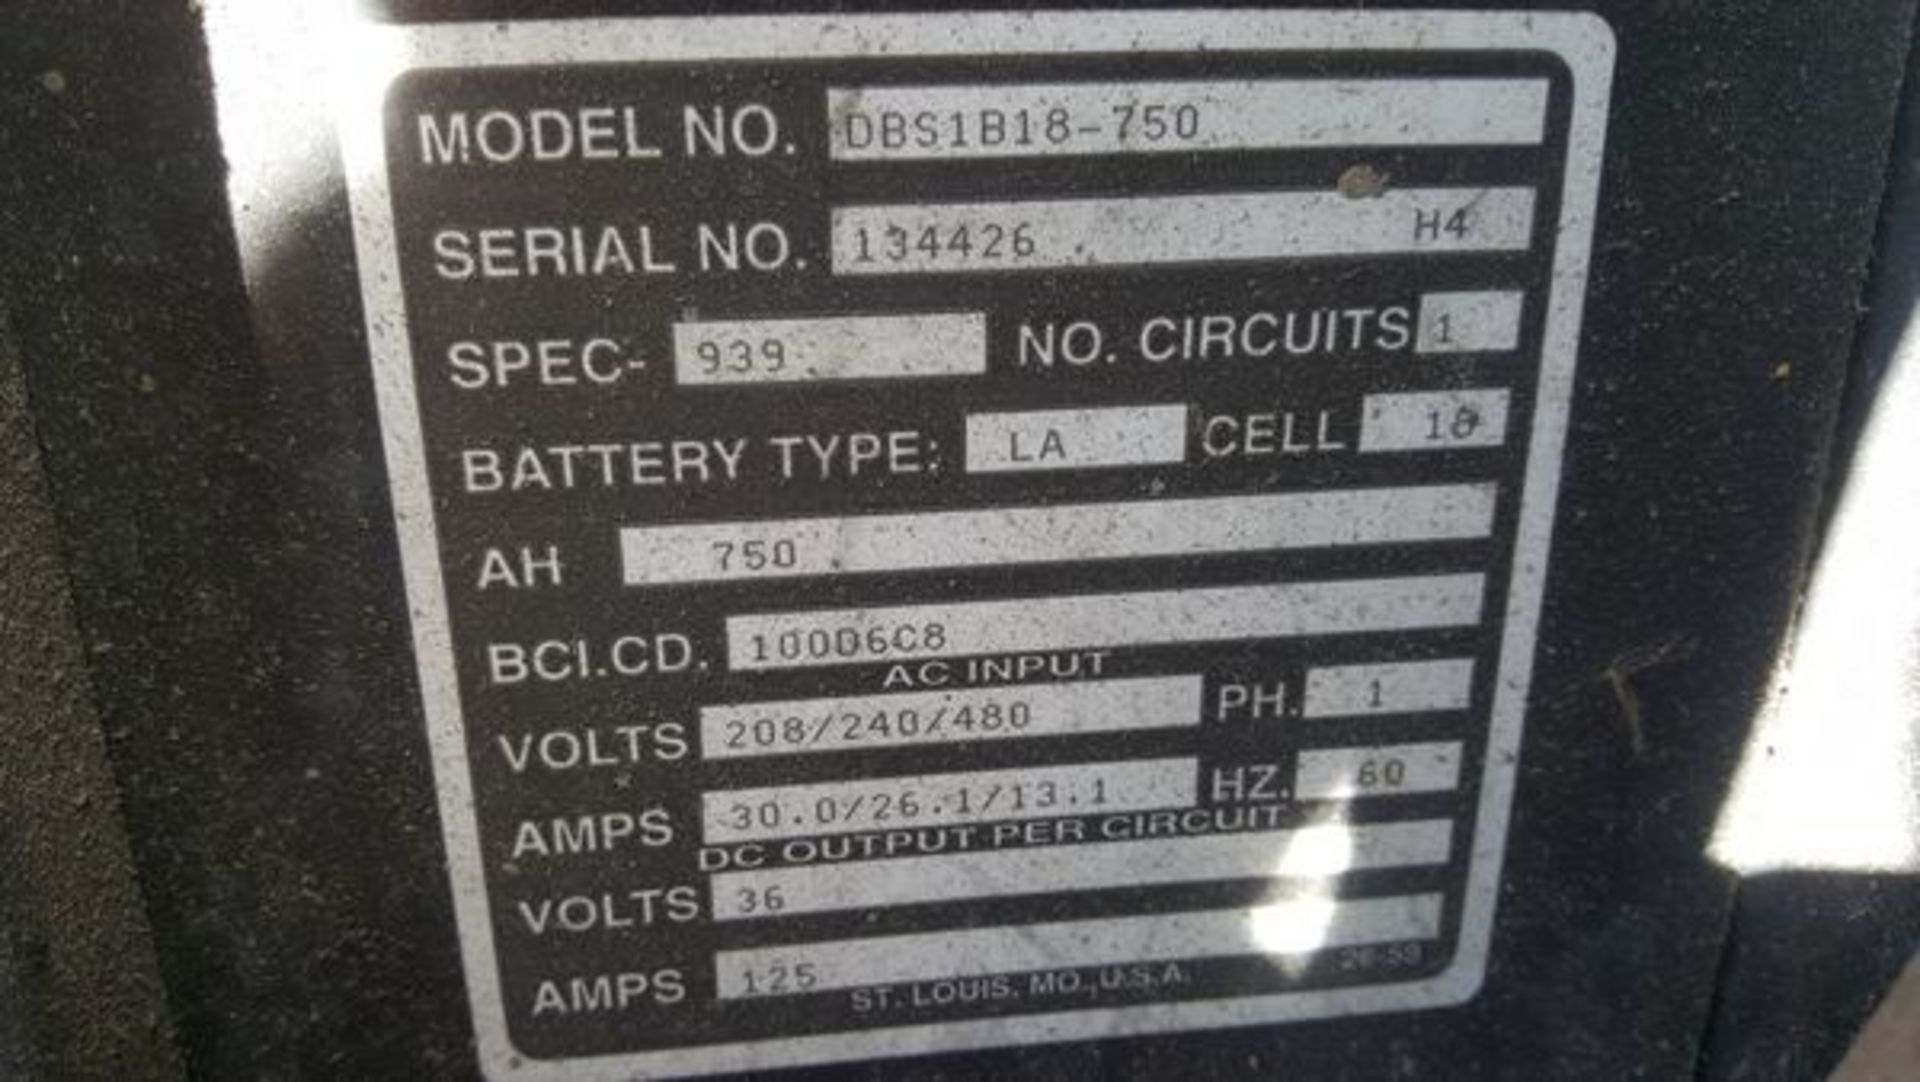 Douglas 36 volt battery charger, Model DBS1B16-750 - Image 3 of 6